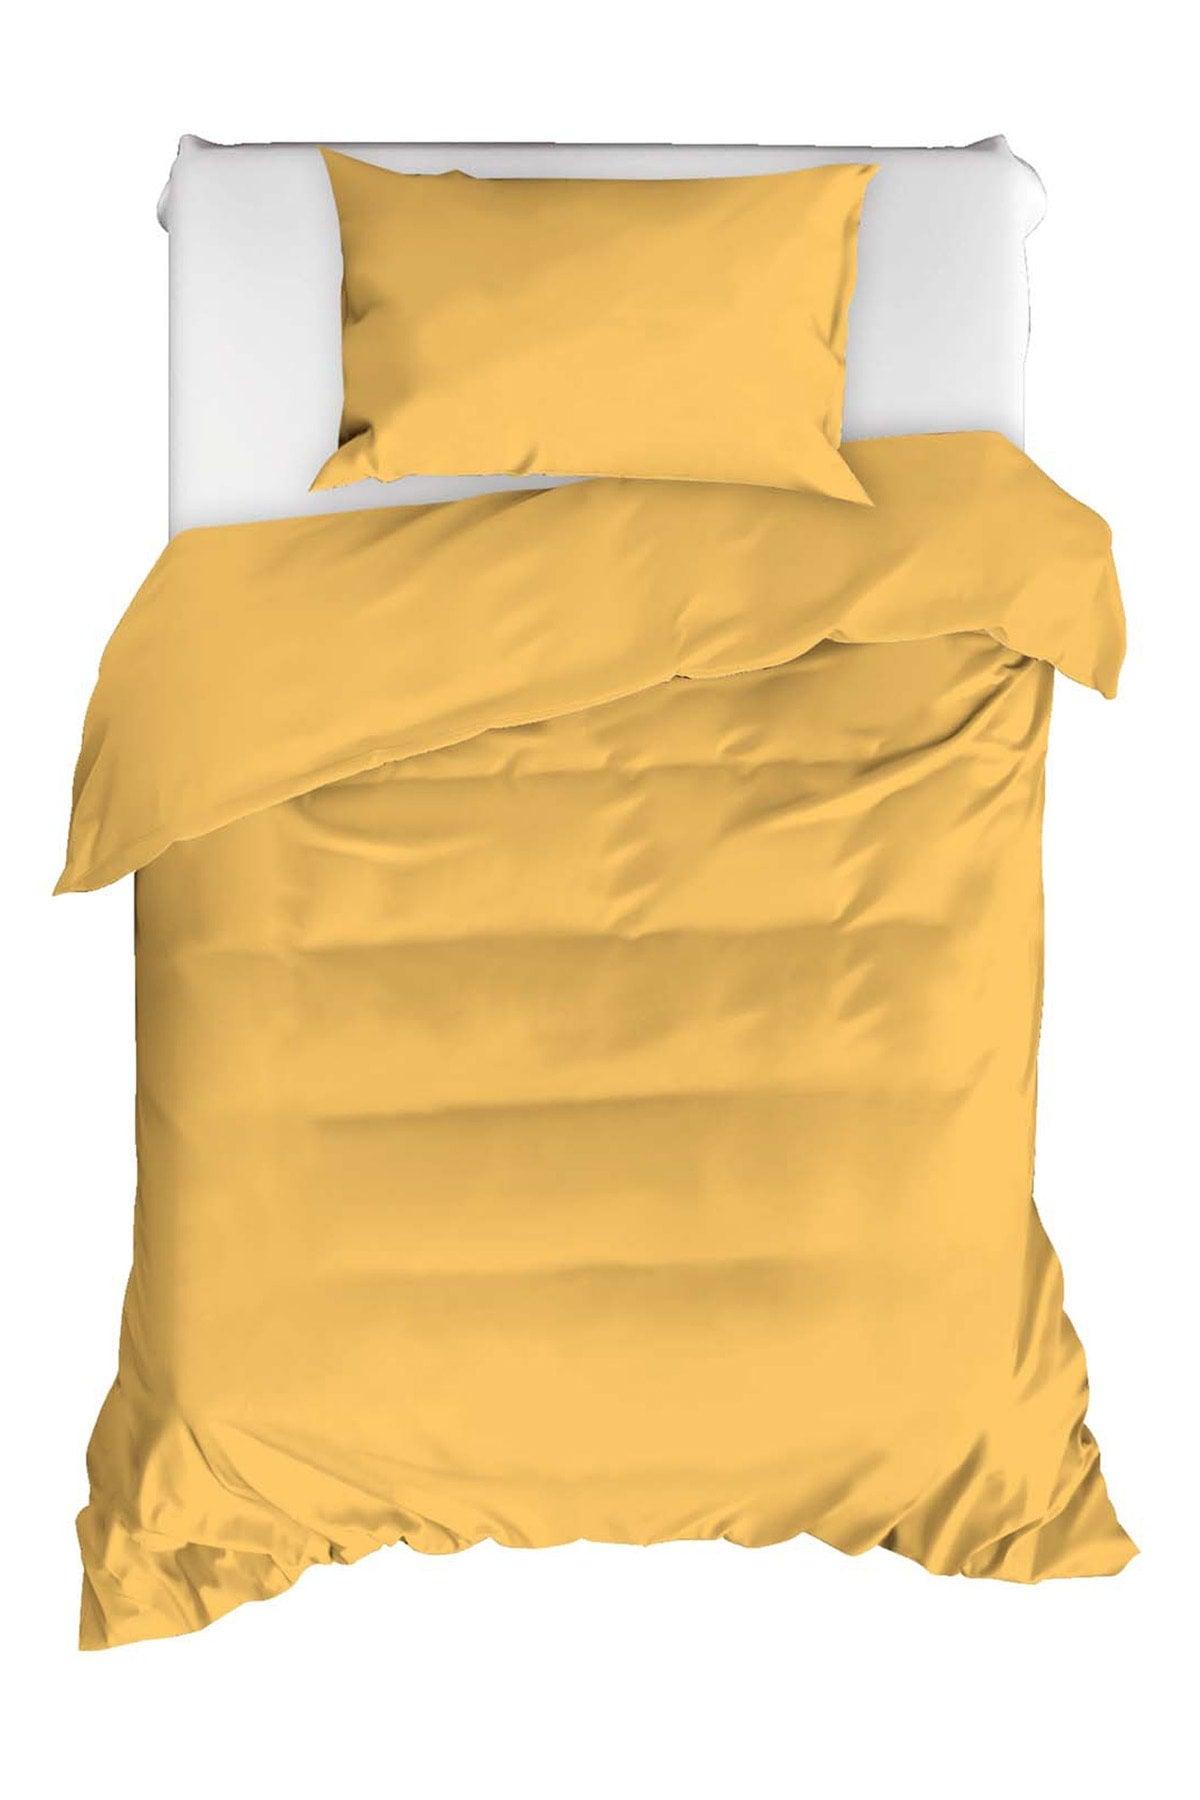 100% Natural Cotton Solid Color Duvet Cover Set Single FreshColor Yellow - Swordslife